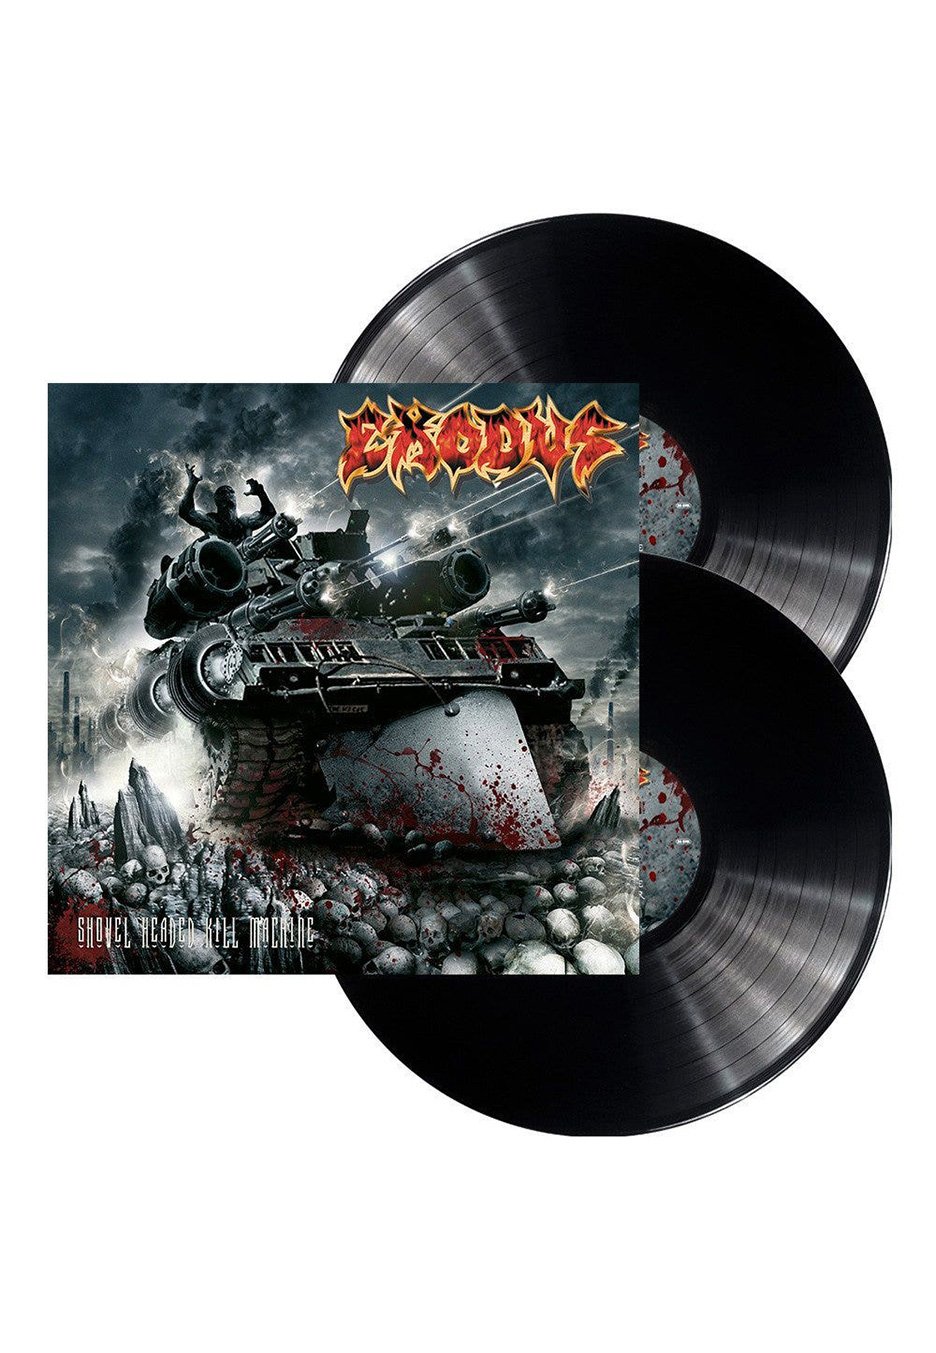 Exodus - Shovel Headed Kill Machine - 2 Vinyl